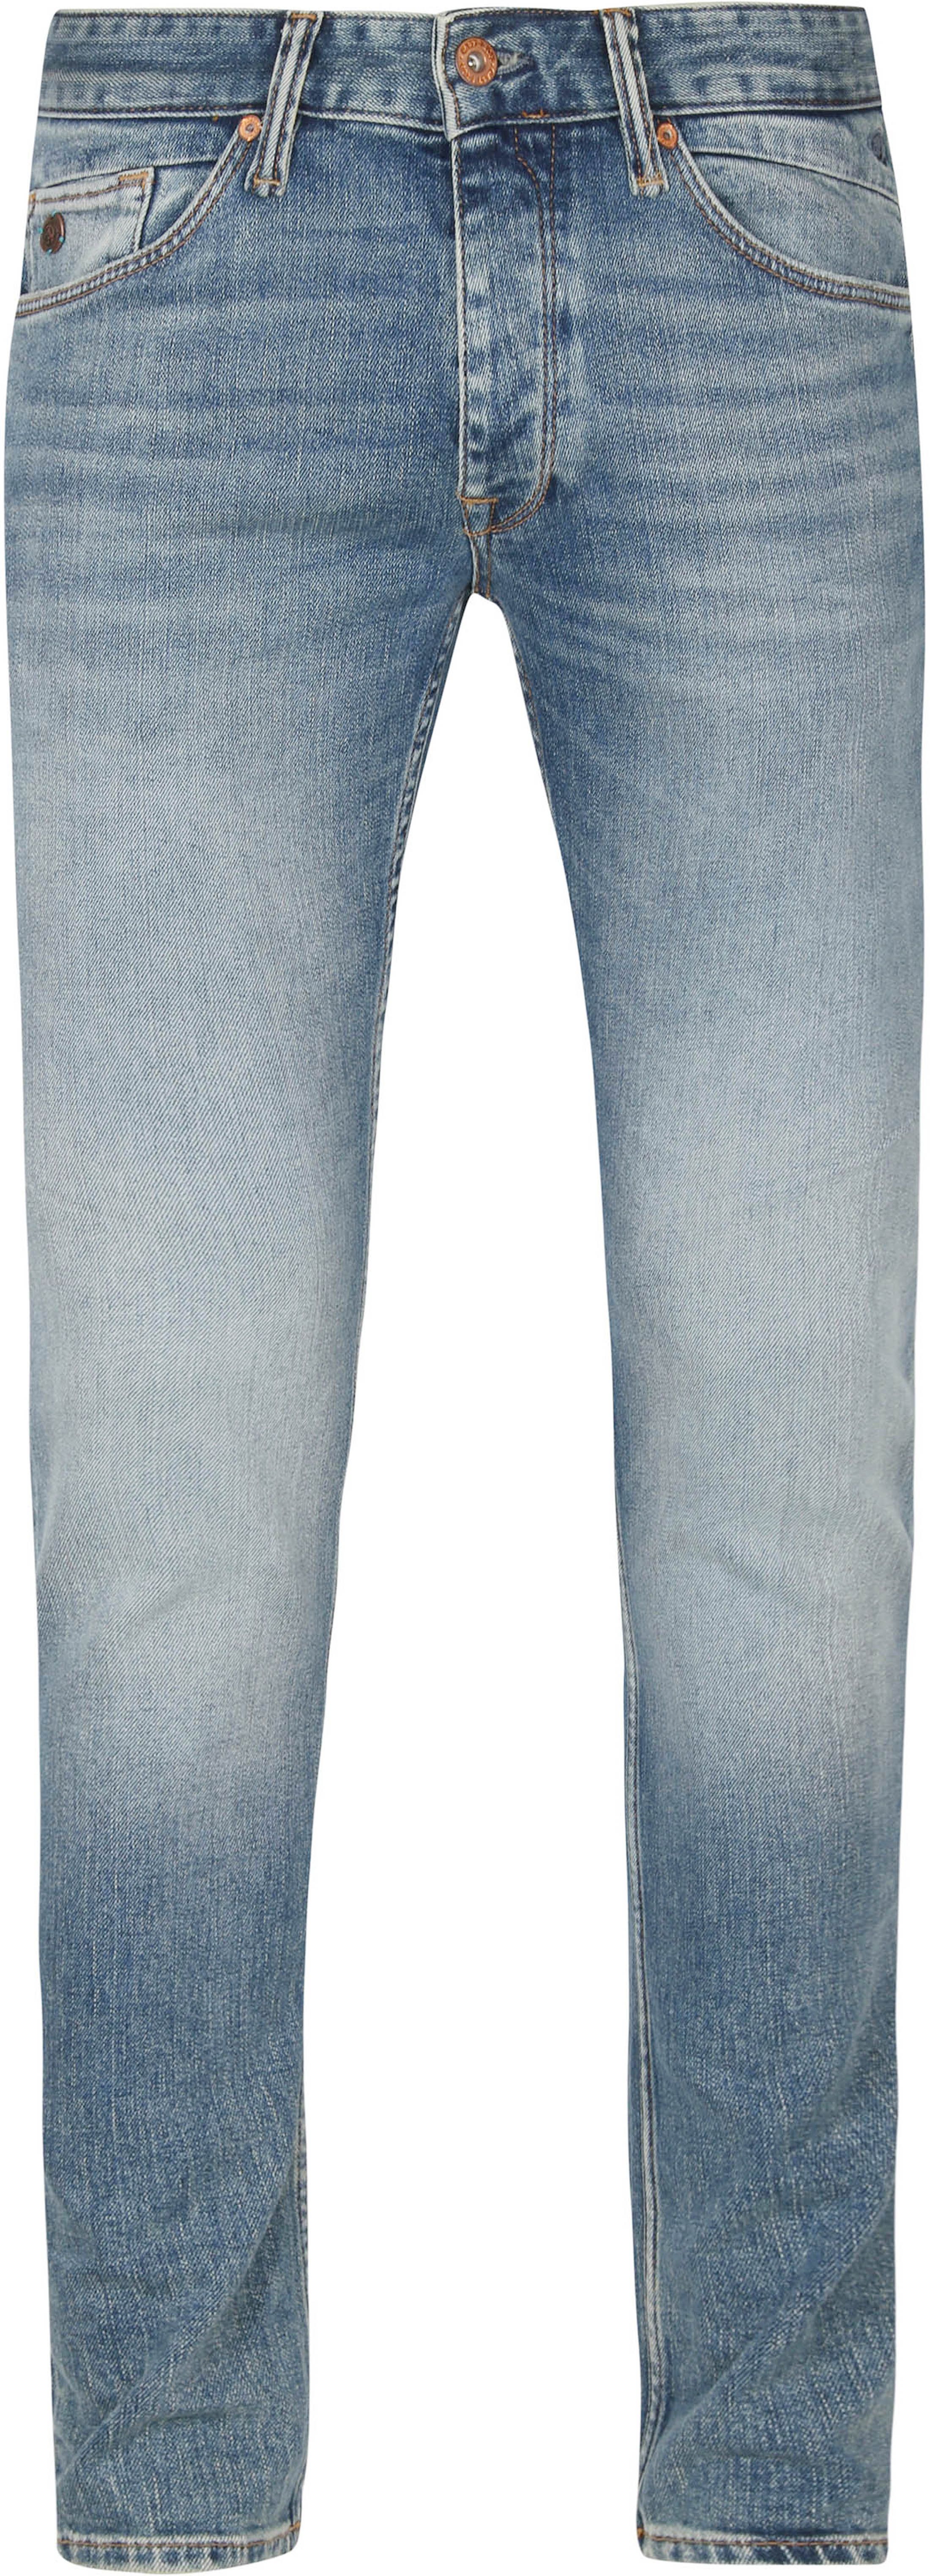 Cast Iron Riser Jeans Clear Sky Dark Blue Blue size W 29